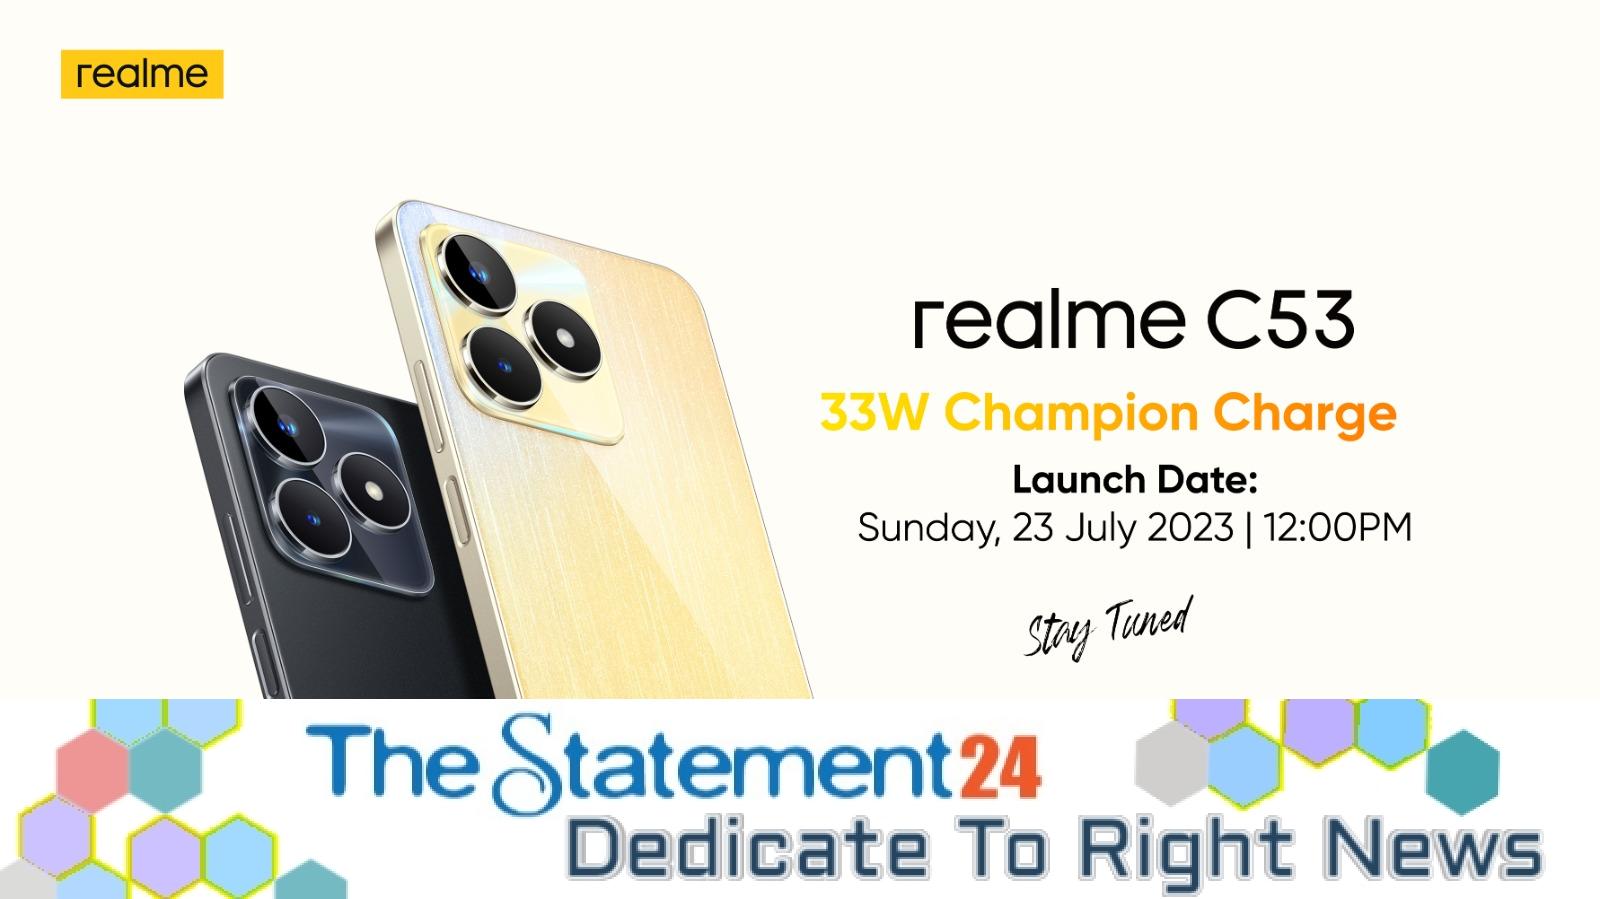 Realme C53 the Entry-Level Smartphone Champion